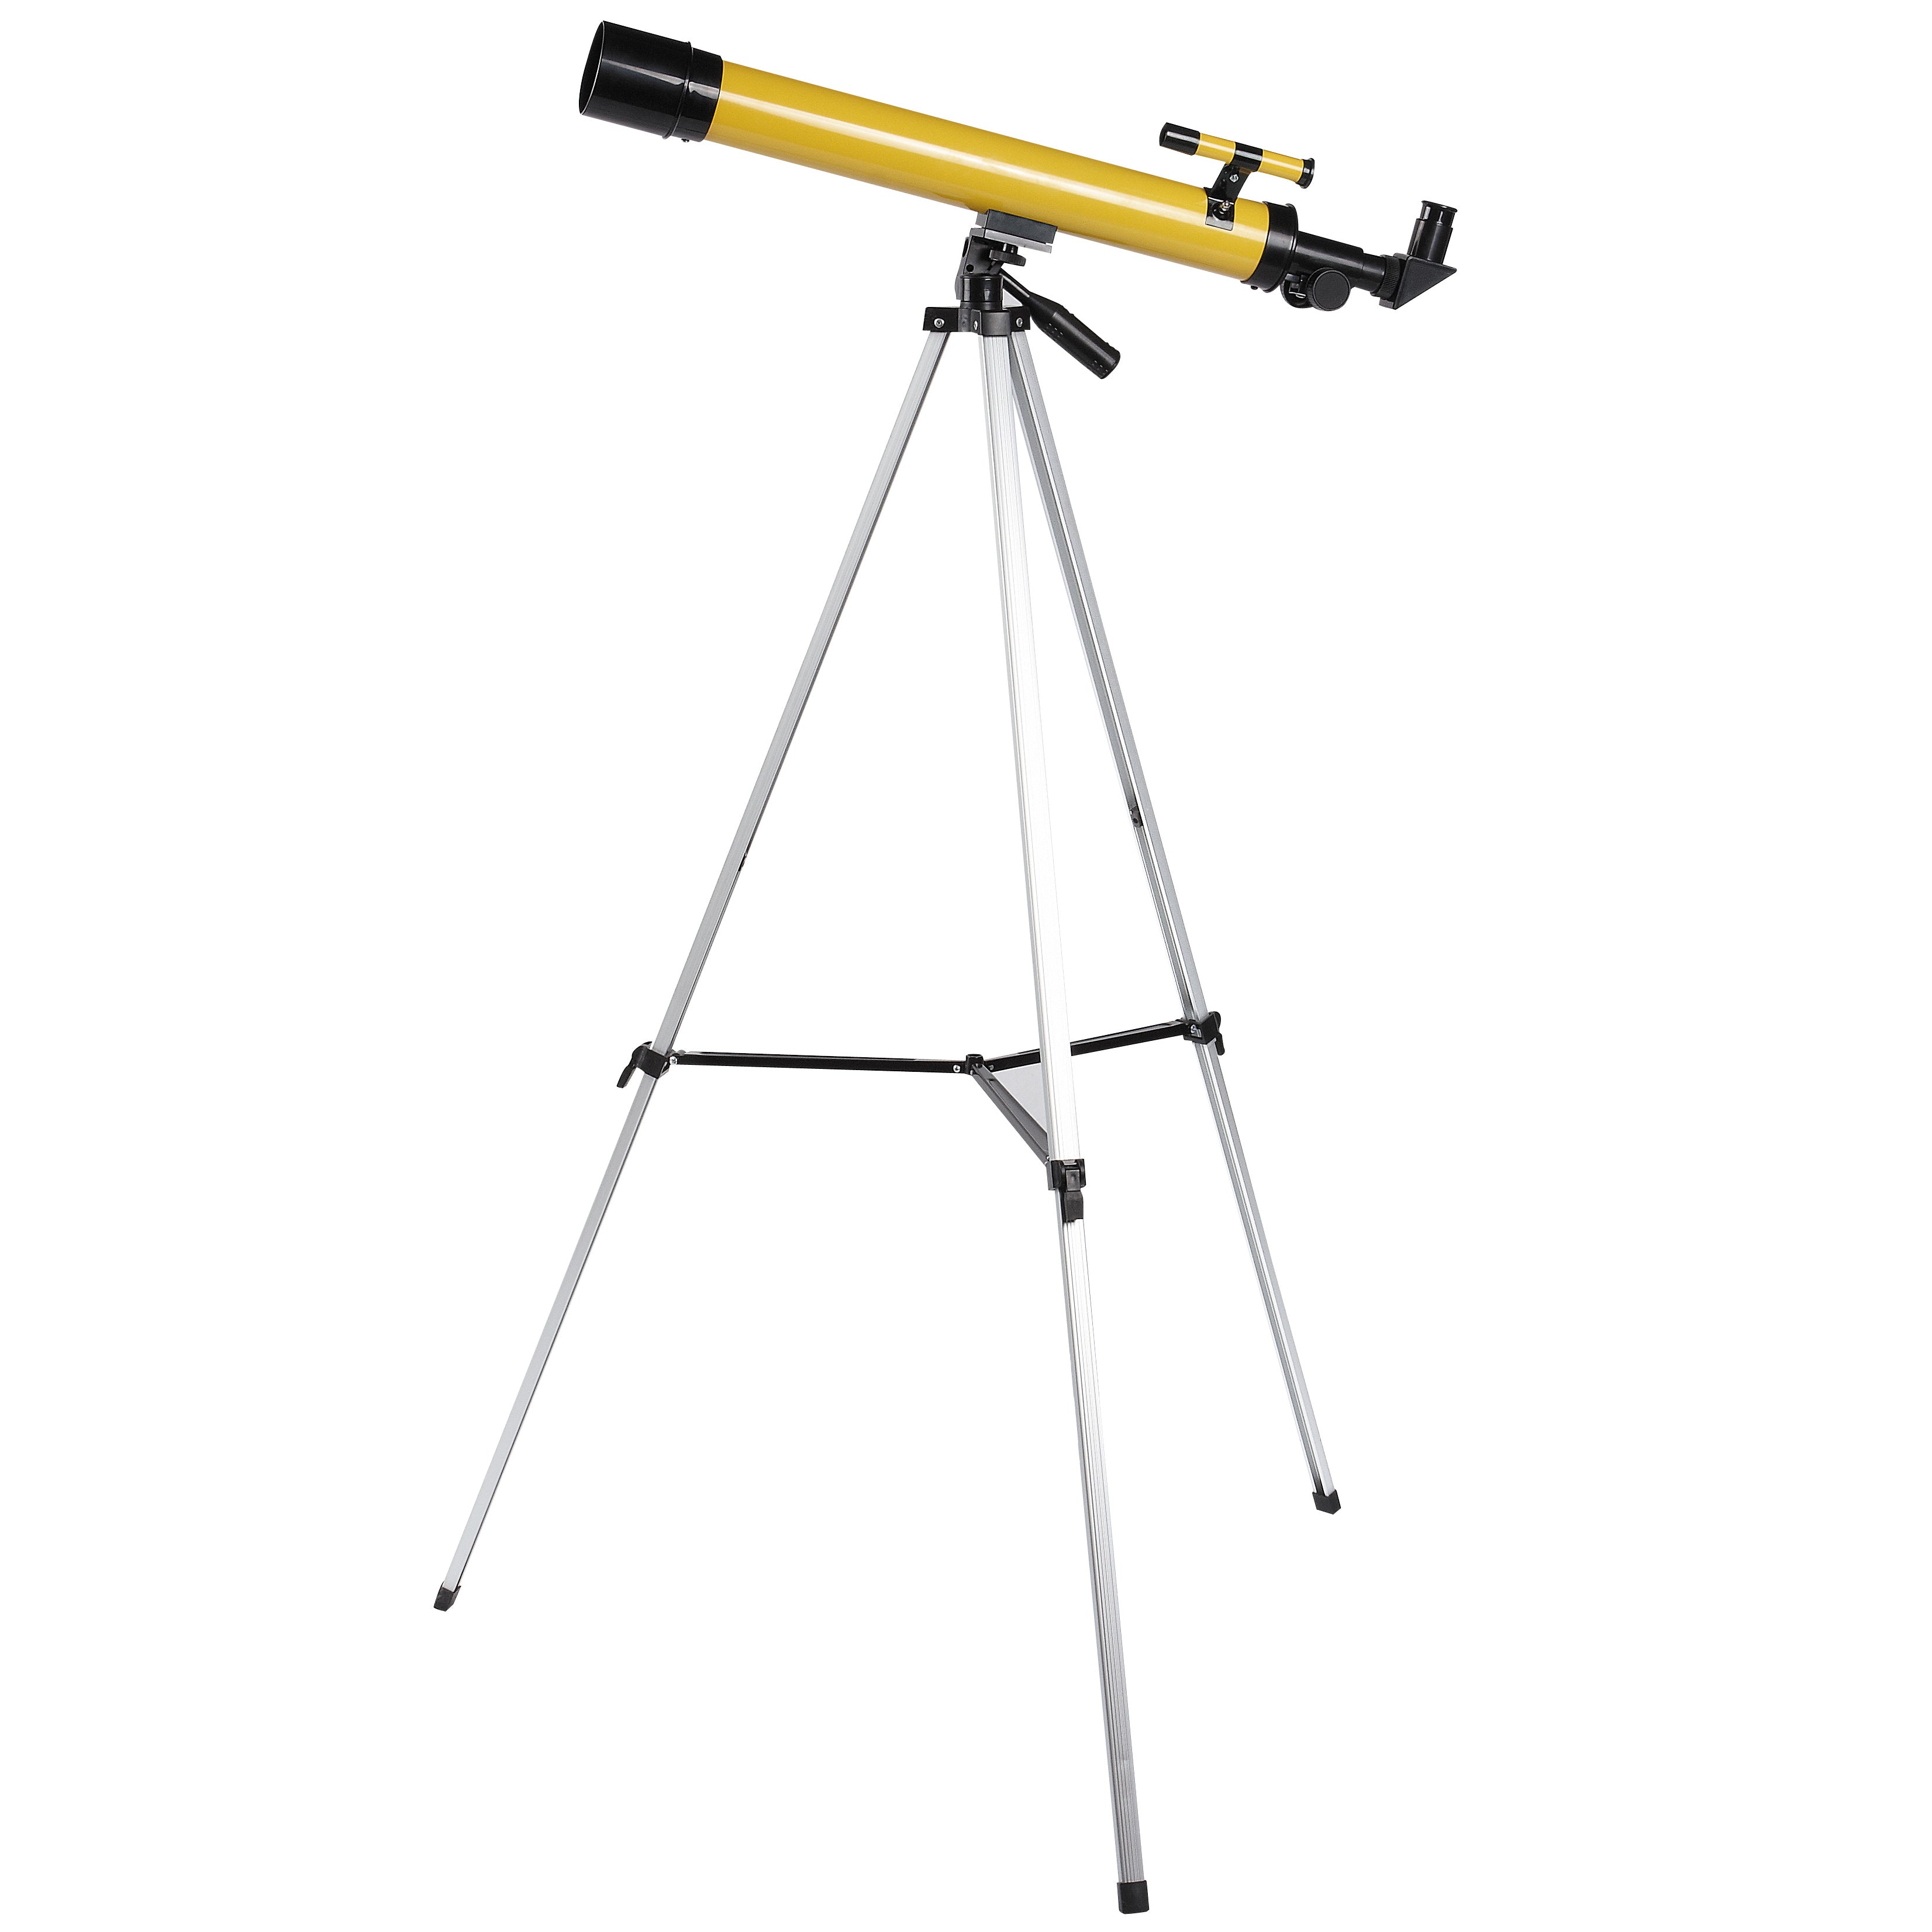 StarPR-M740 Refractor Telescope with 5x24 Finderscope and Adjustable Tripod